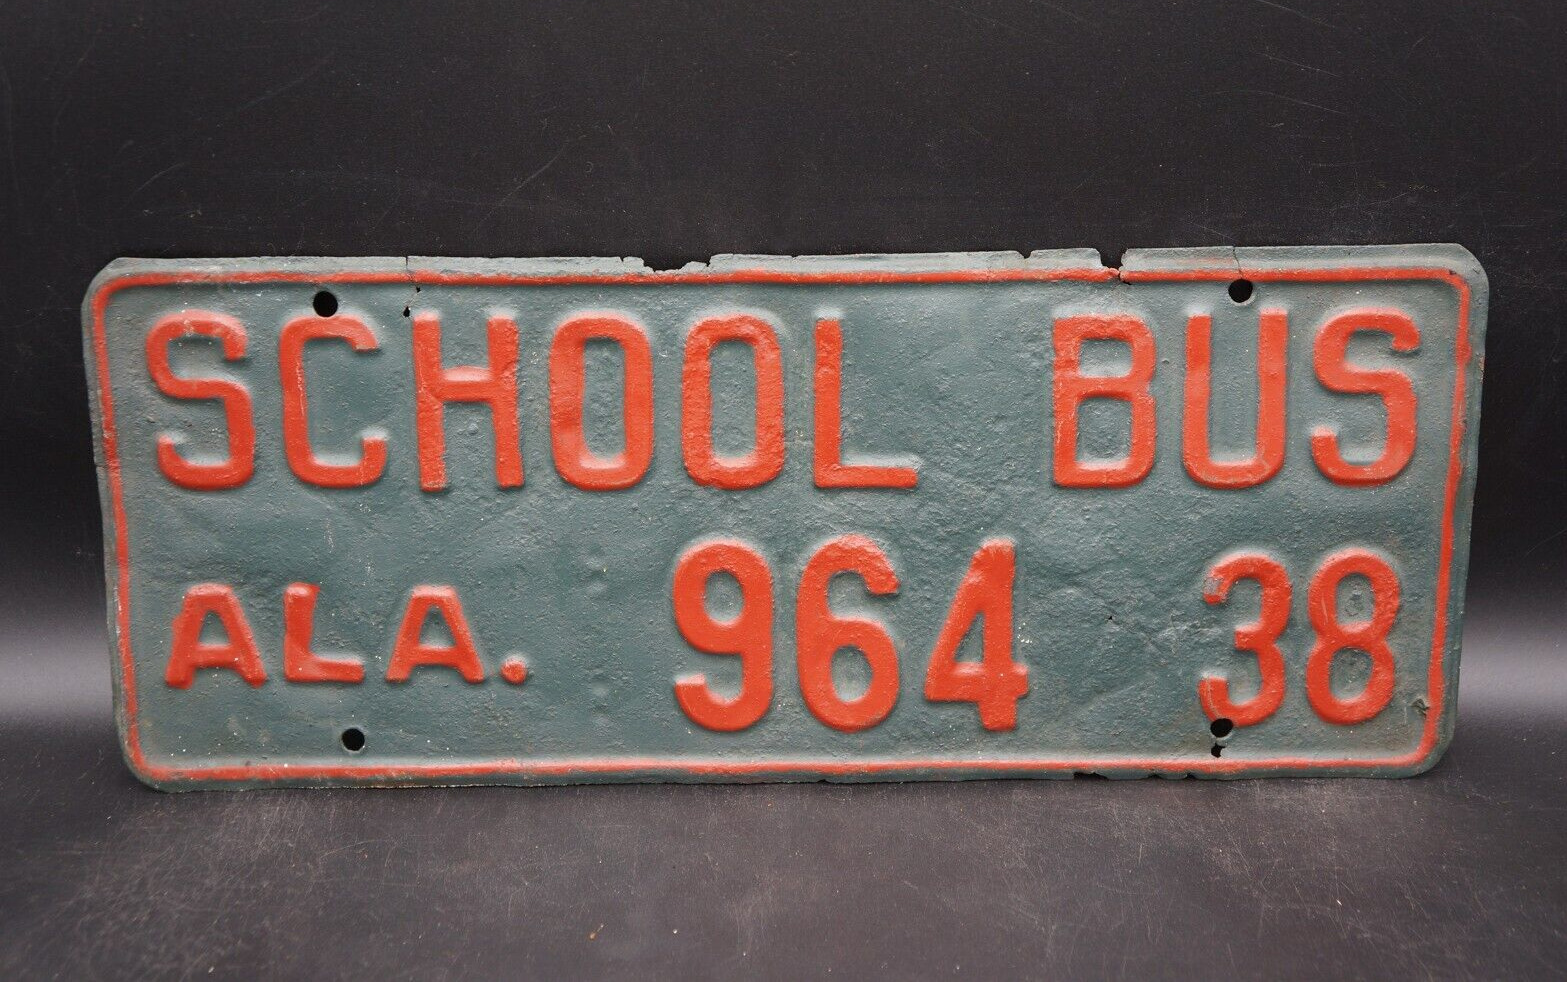 1938 Alabama SCHOOL BUS License Plate Rare # 964